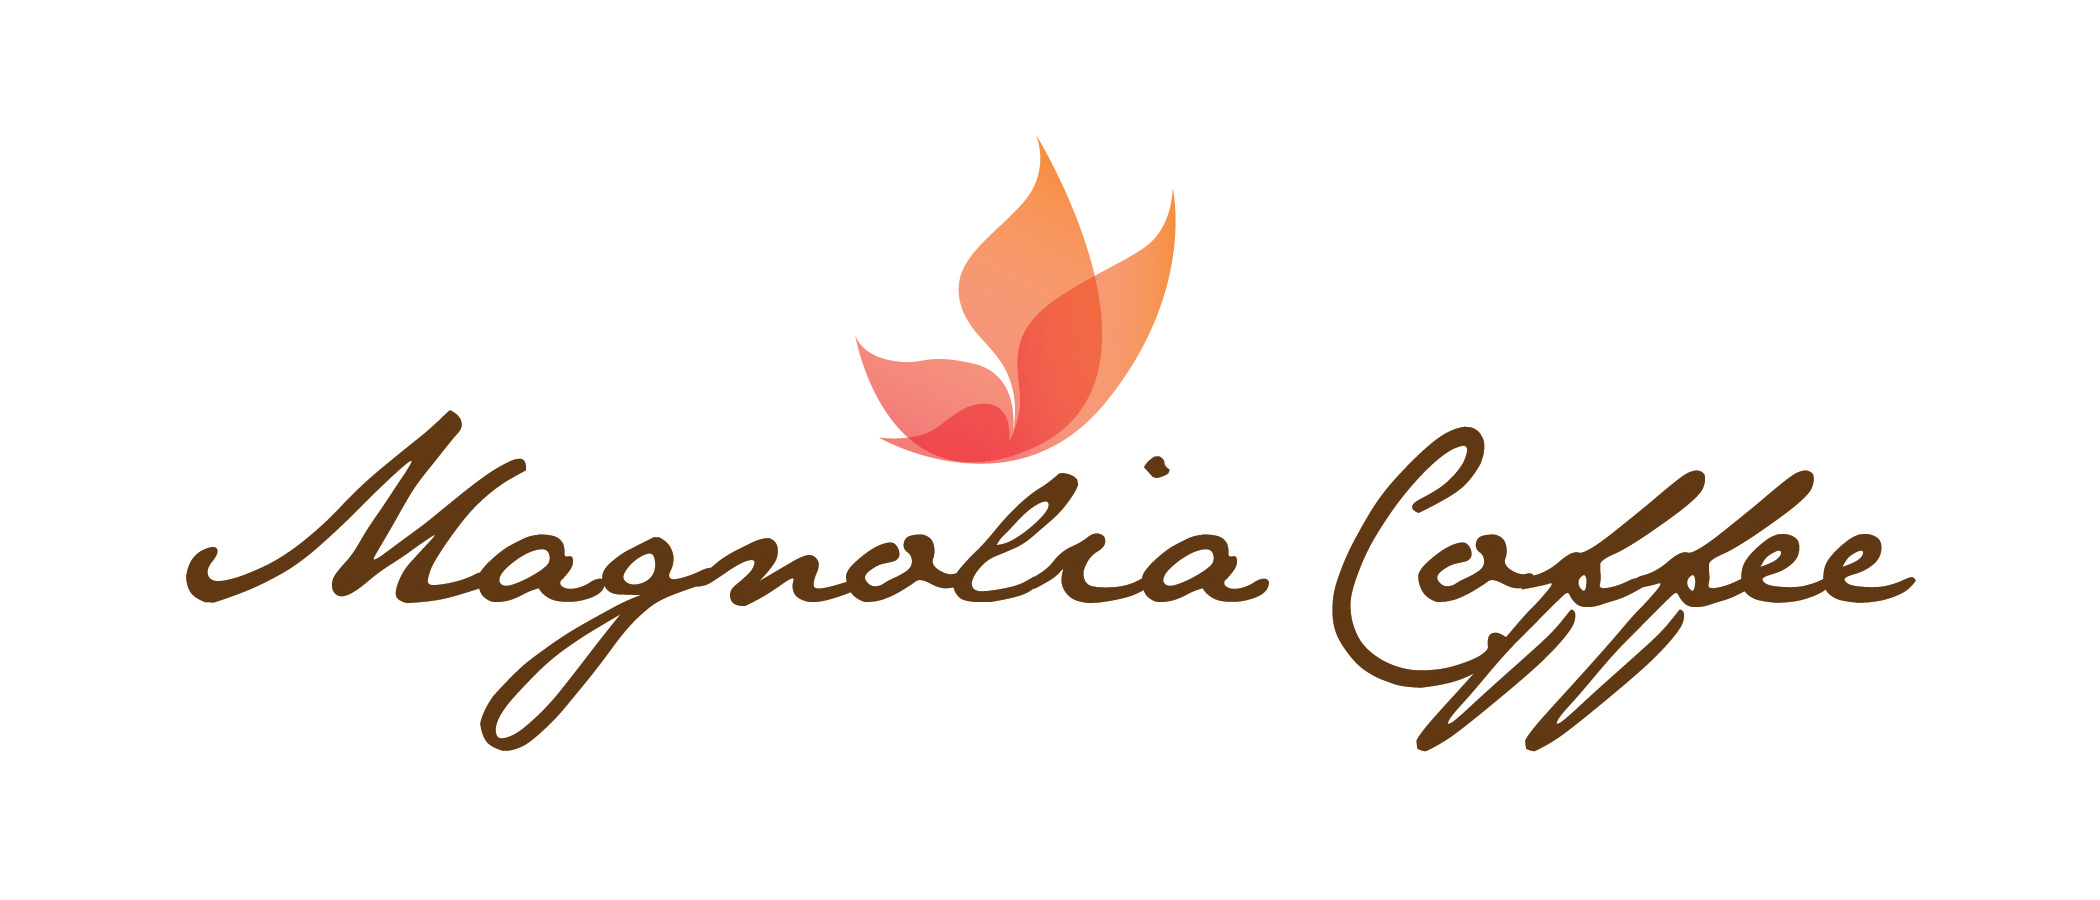 The Secret Chocolatier and Magnolia Coffee Company Collaborate on